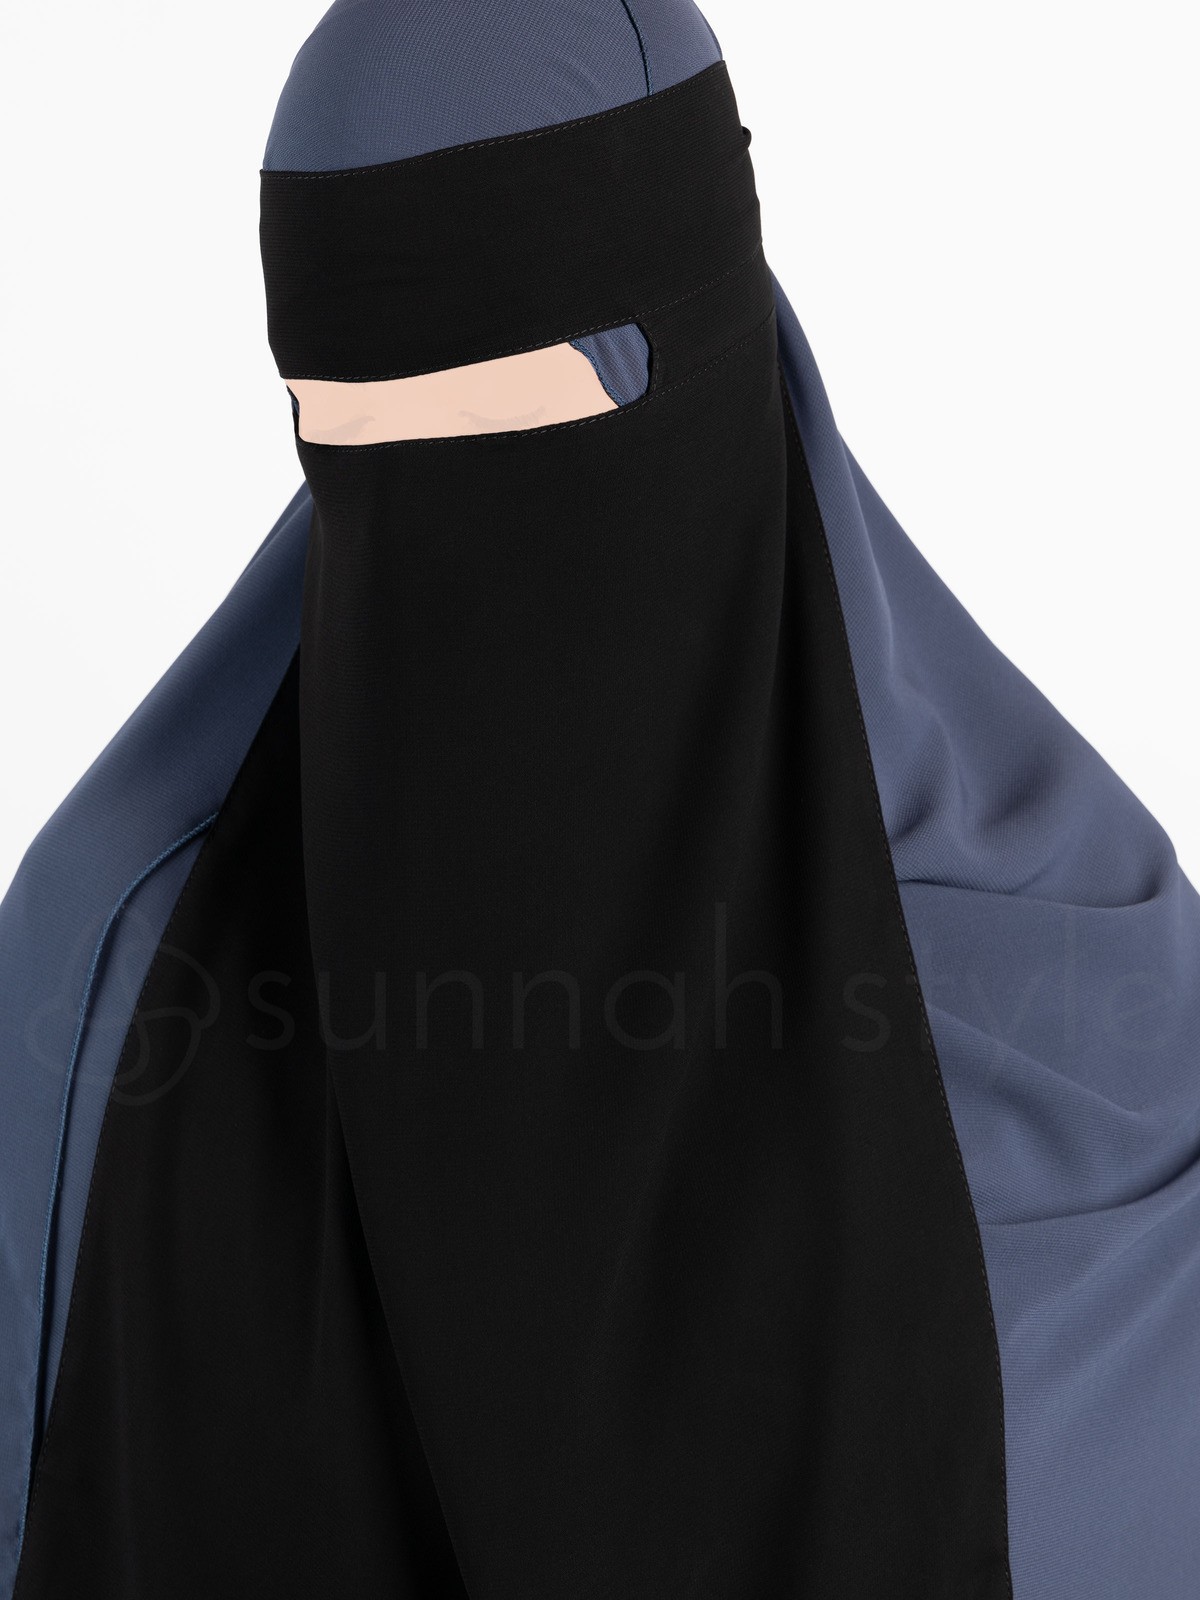 Sunnah Style - Long No-Pinch One Layer Niqab (Black)